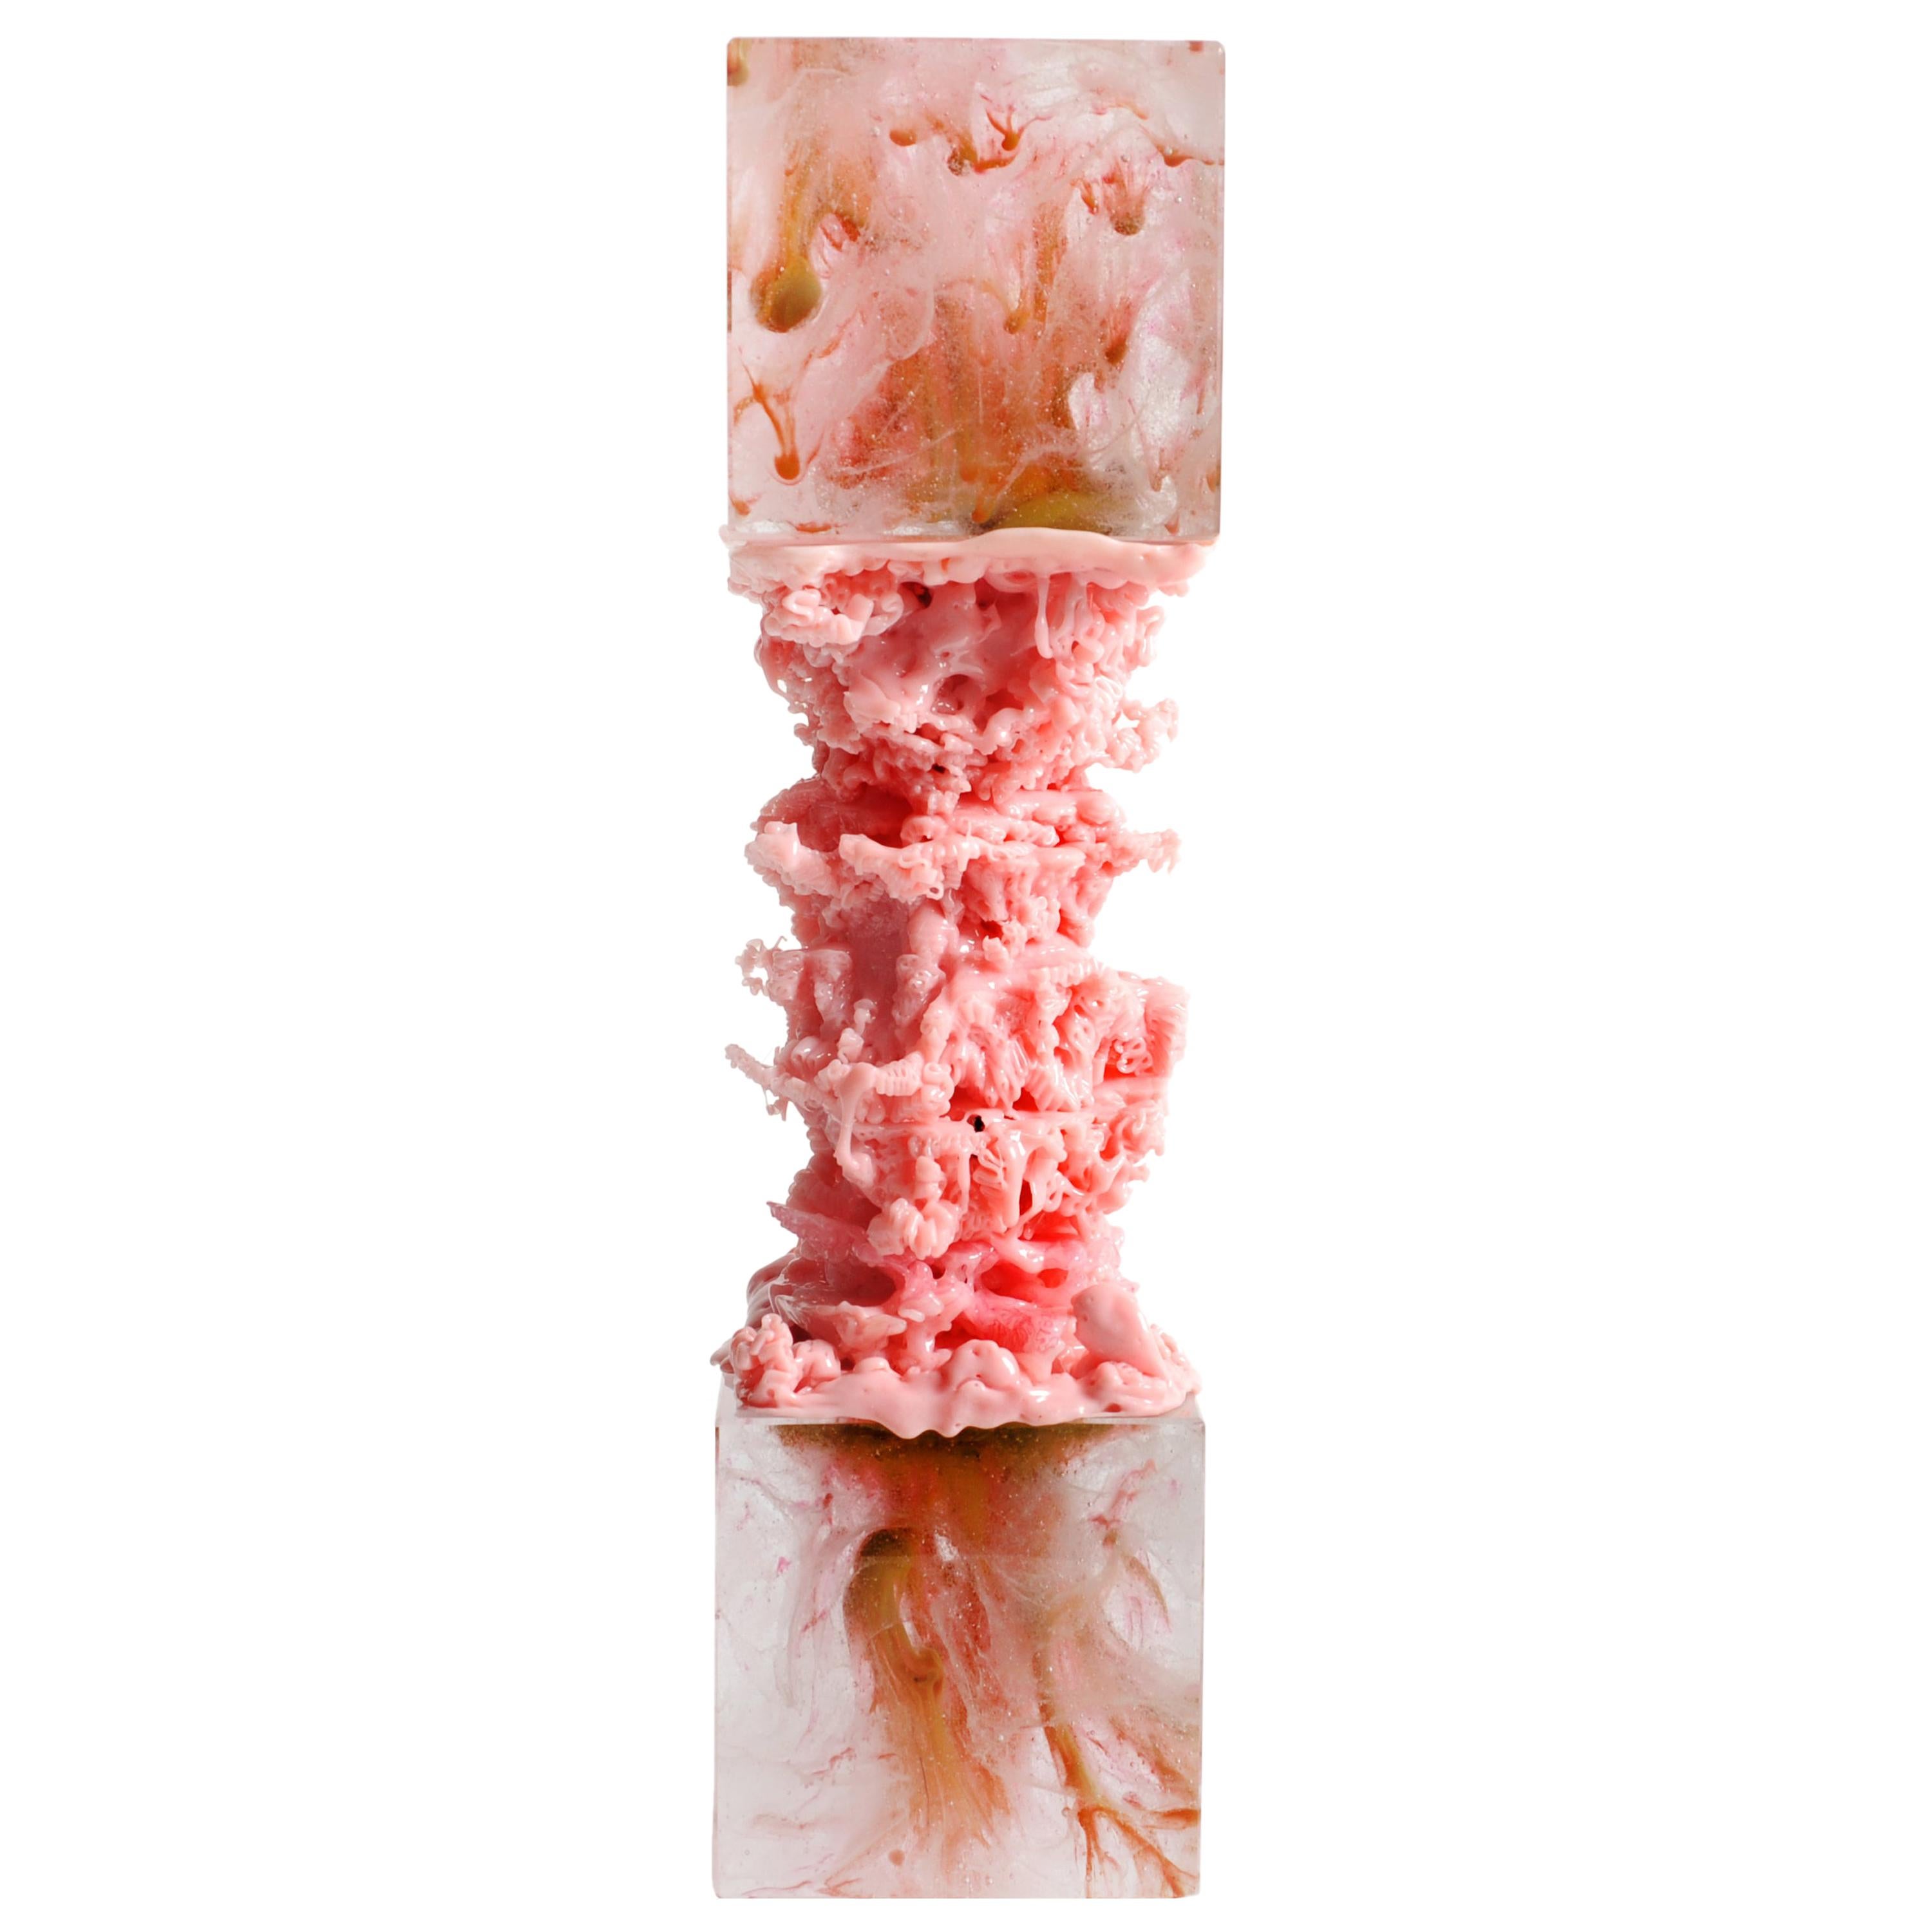 Glass vs. Plastic collection, "Feminine Ruben" coral pink organic sculpture